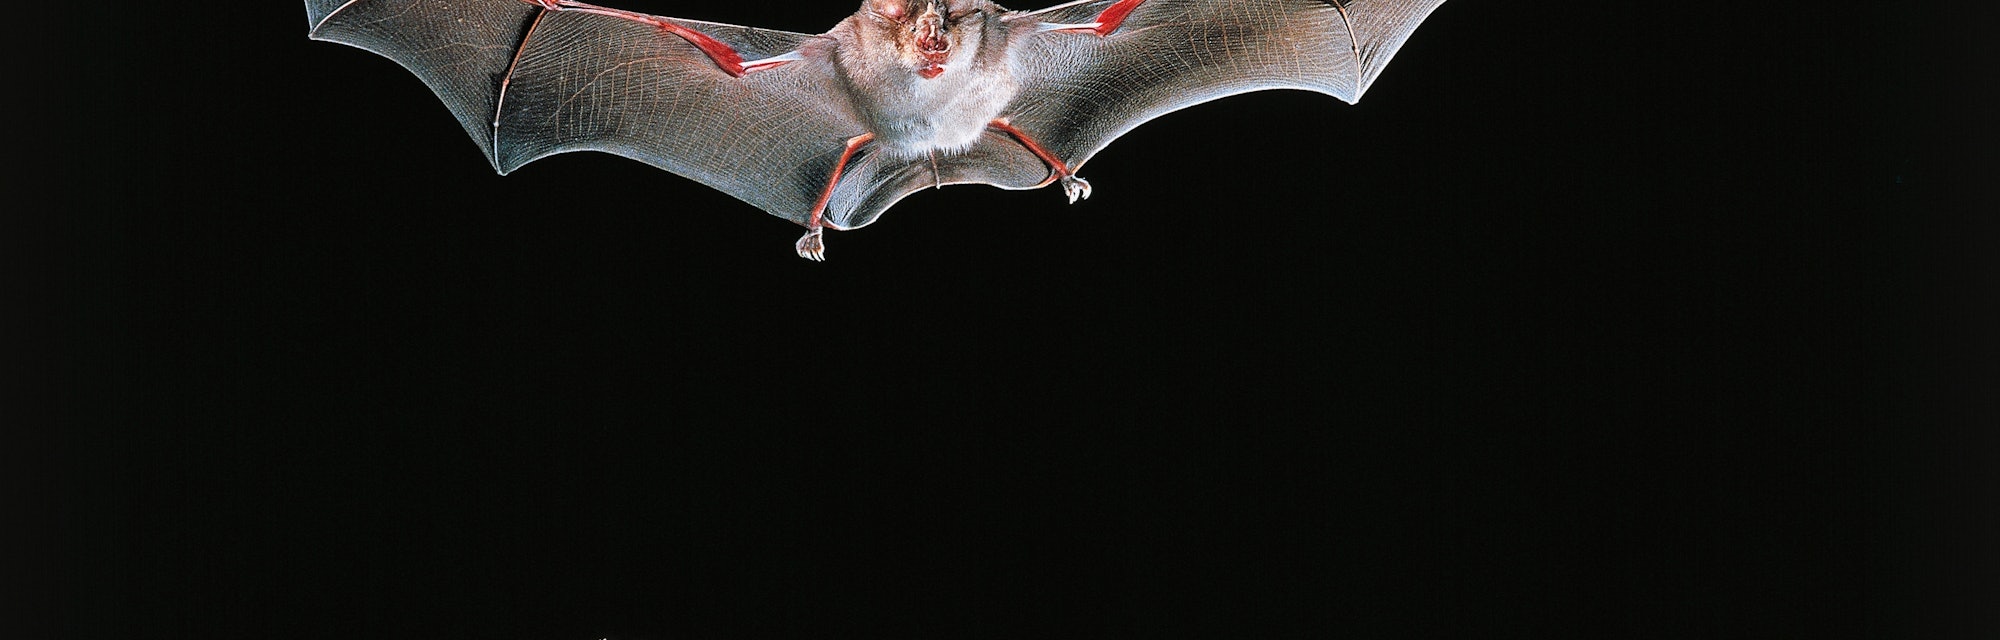 UNSPECIFIED - MARCH 03: Greater Horseshoe Bat (Rhinolophus ferrumequinum), Rinolofidae, while catchi...